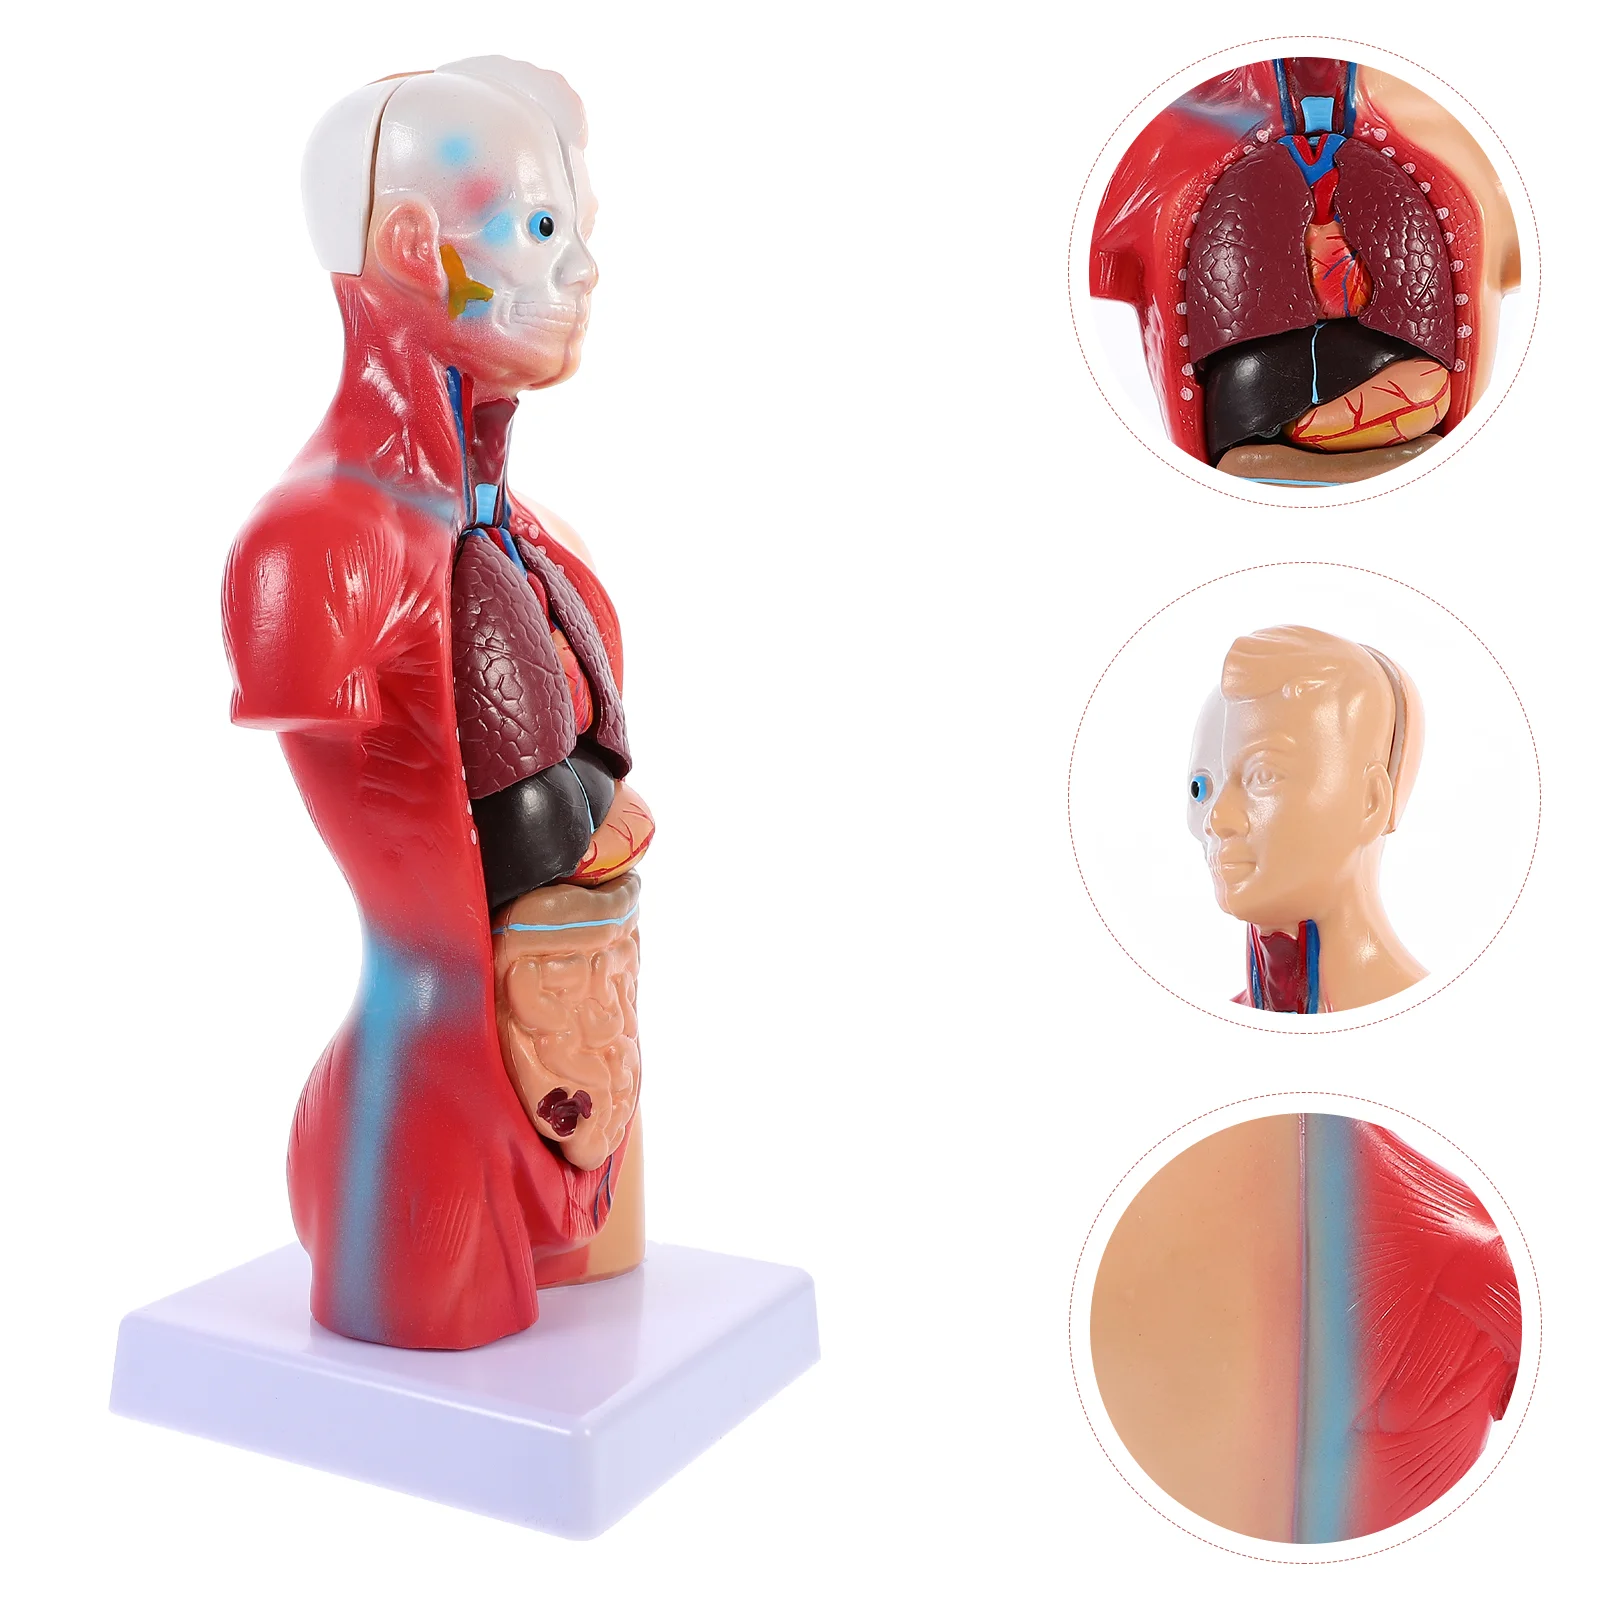 

Mannequin Kid Toy Teaching Anatomy Torso Model Medical Anatomical Pvc Child Human Body for children Greys